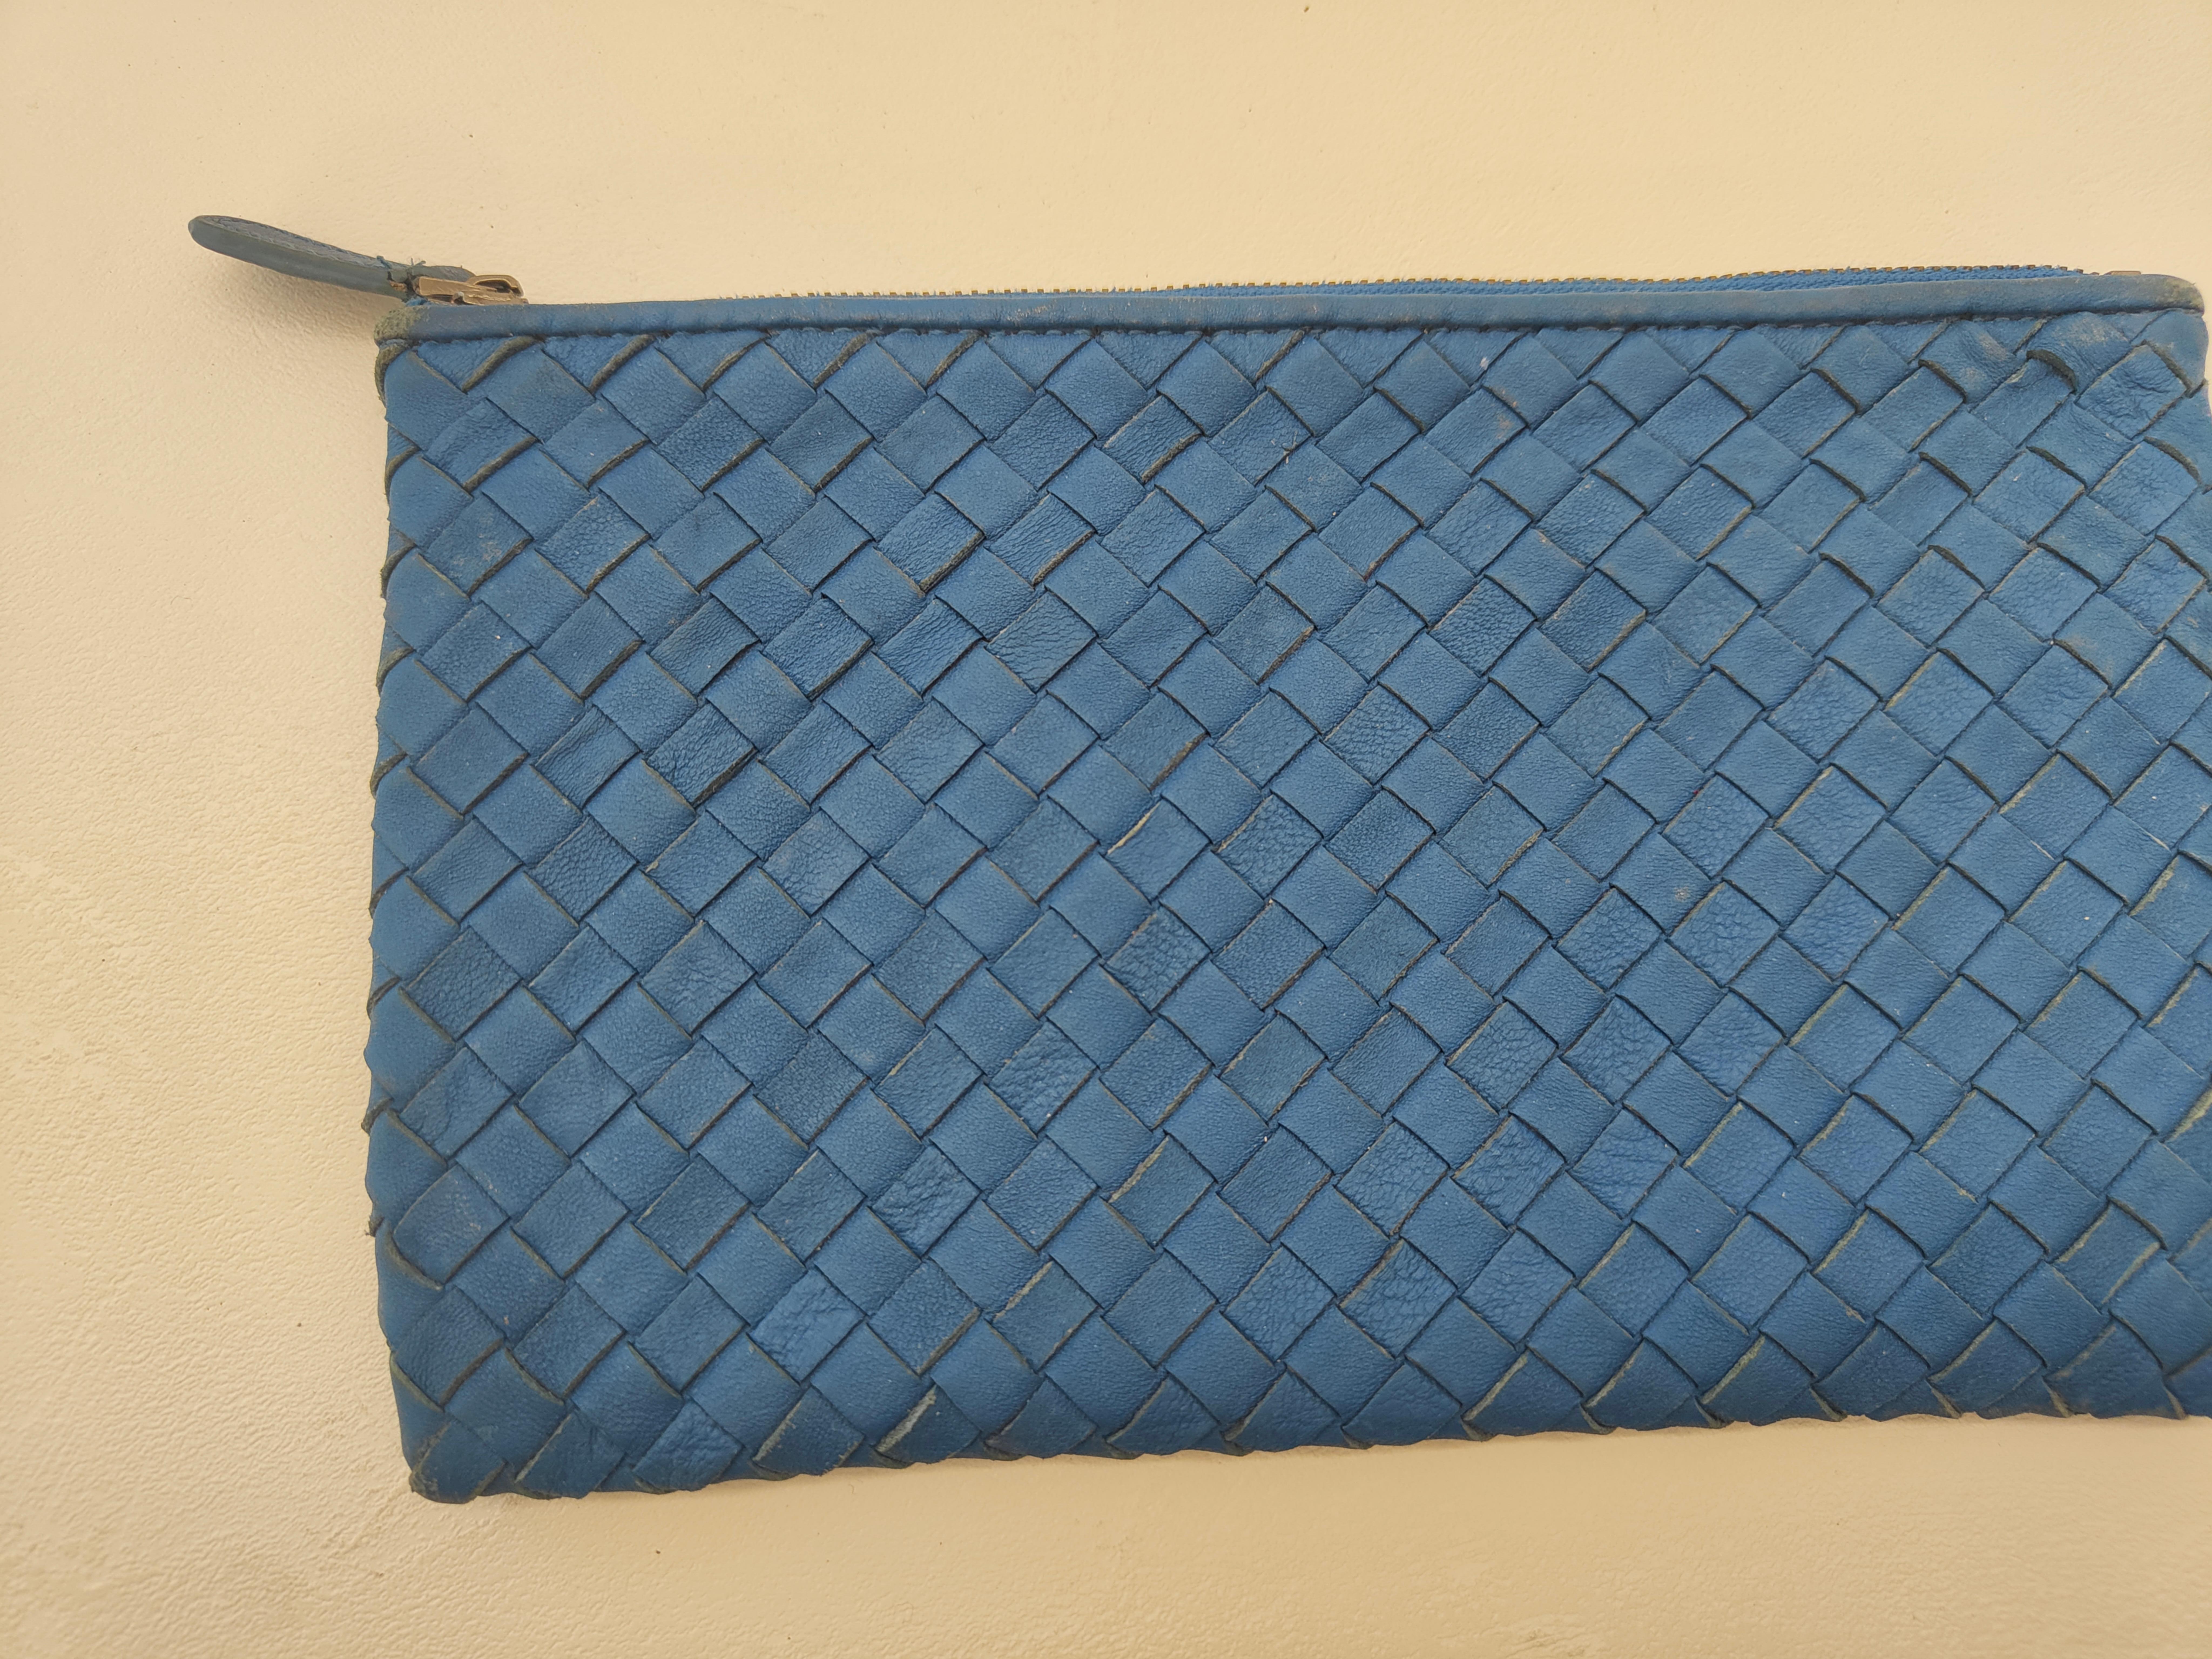 Botttega Veneta blue leather clutch wallet
23*13cm